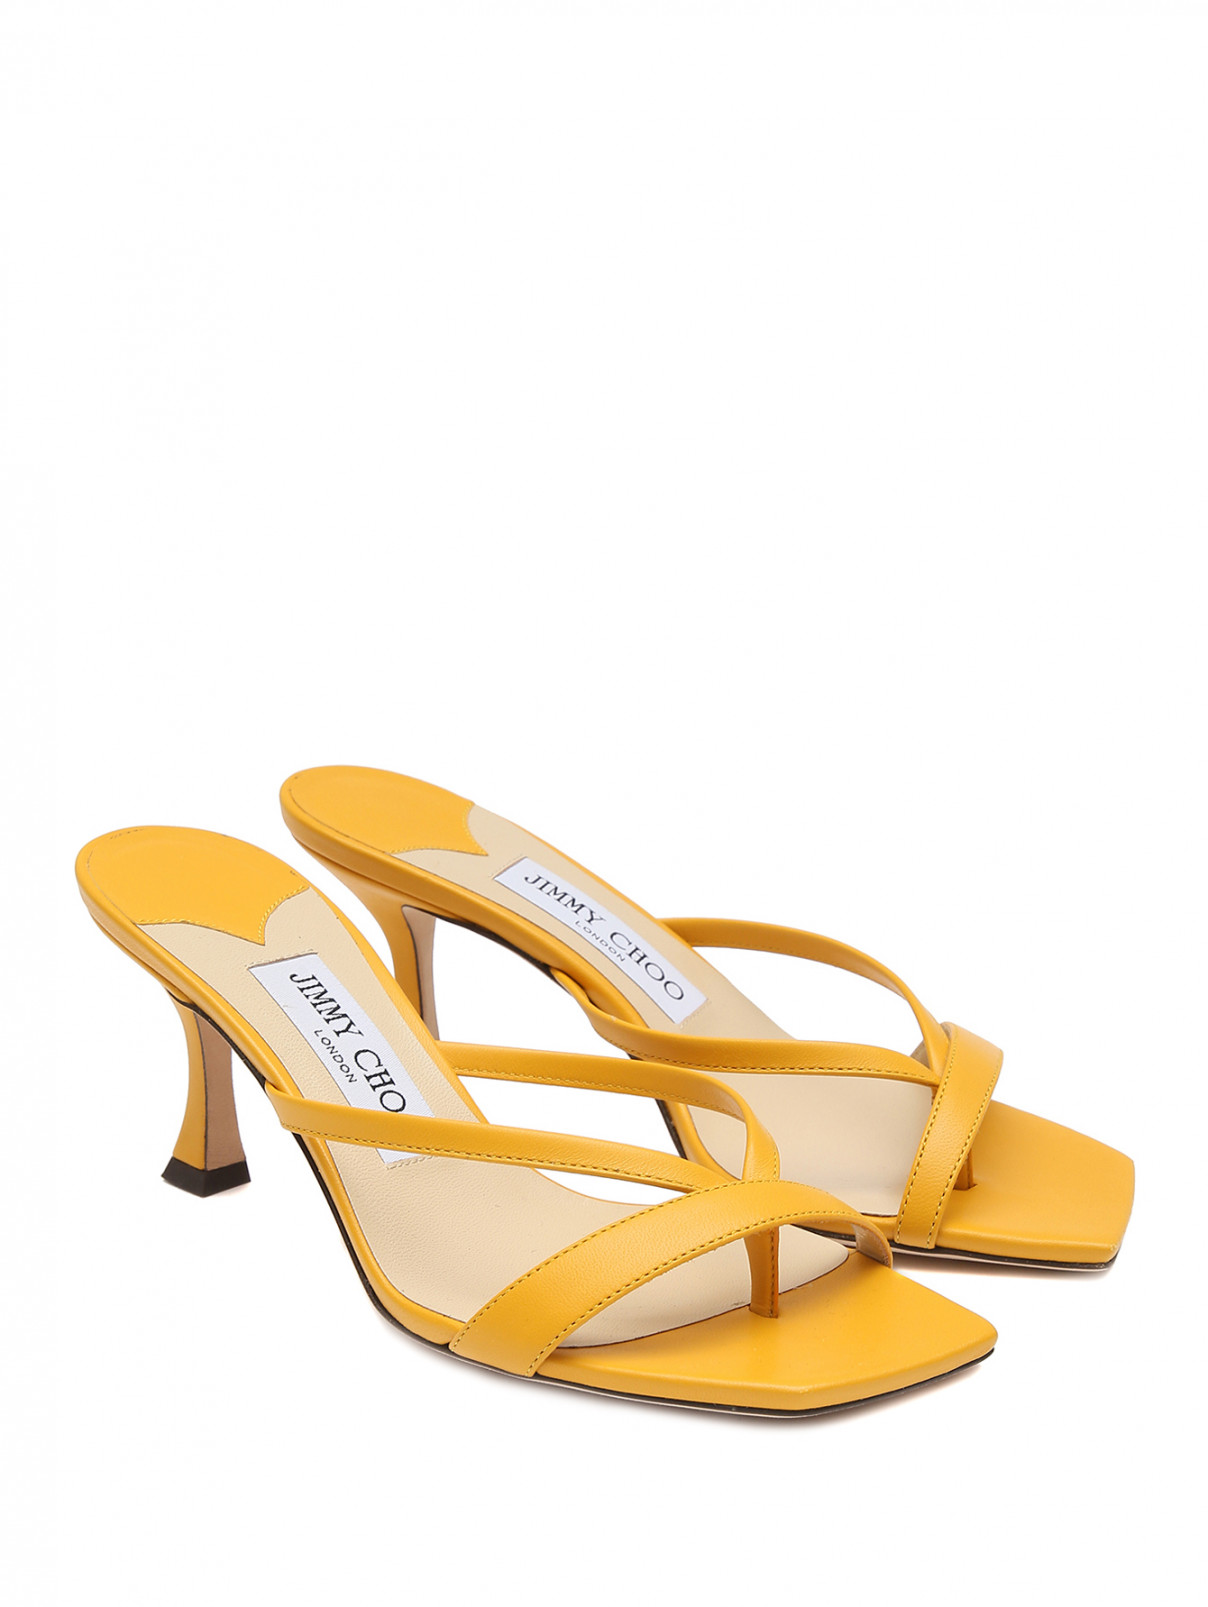 Босоножки на каблуке Jimmy Choo  –  Общий вид  – Цвет:  Желтый